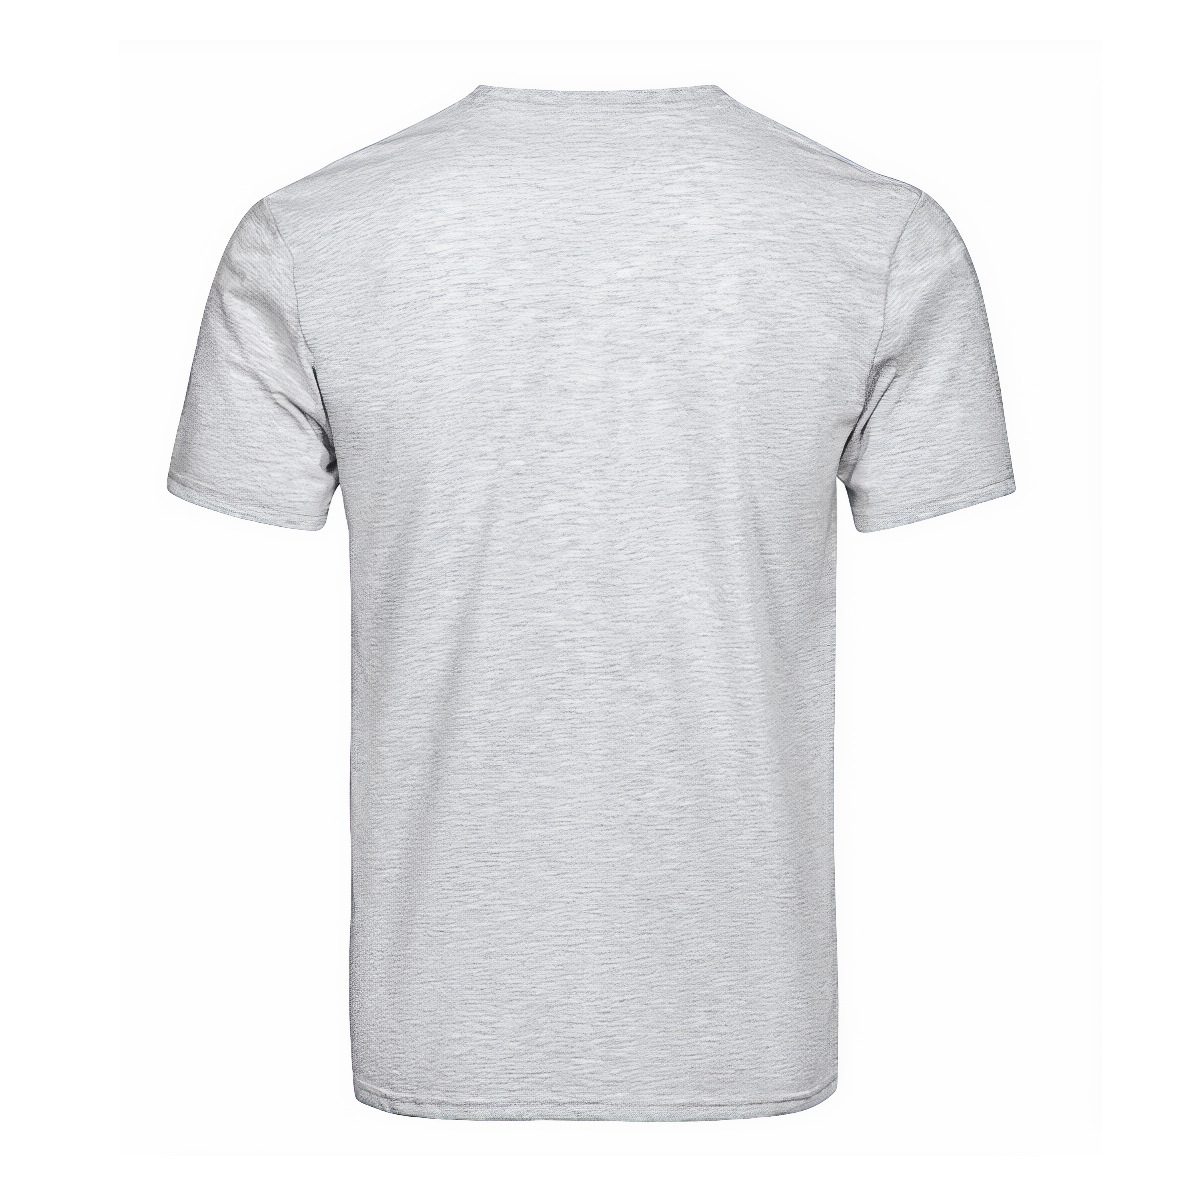 Mowat Tartan Crest T-shirt - I'm not yelling style